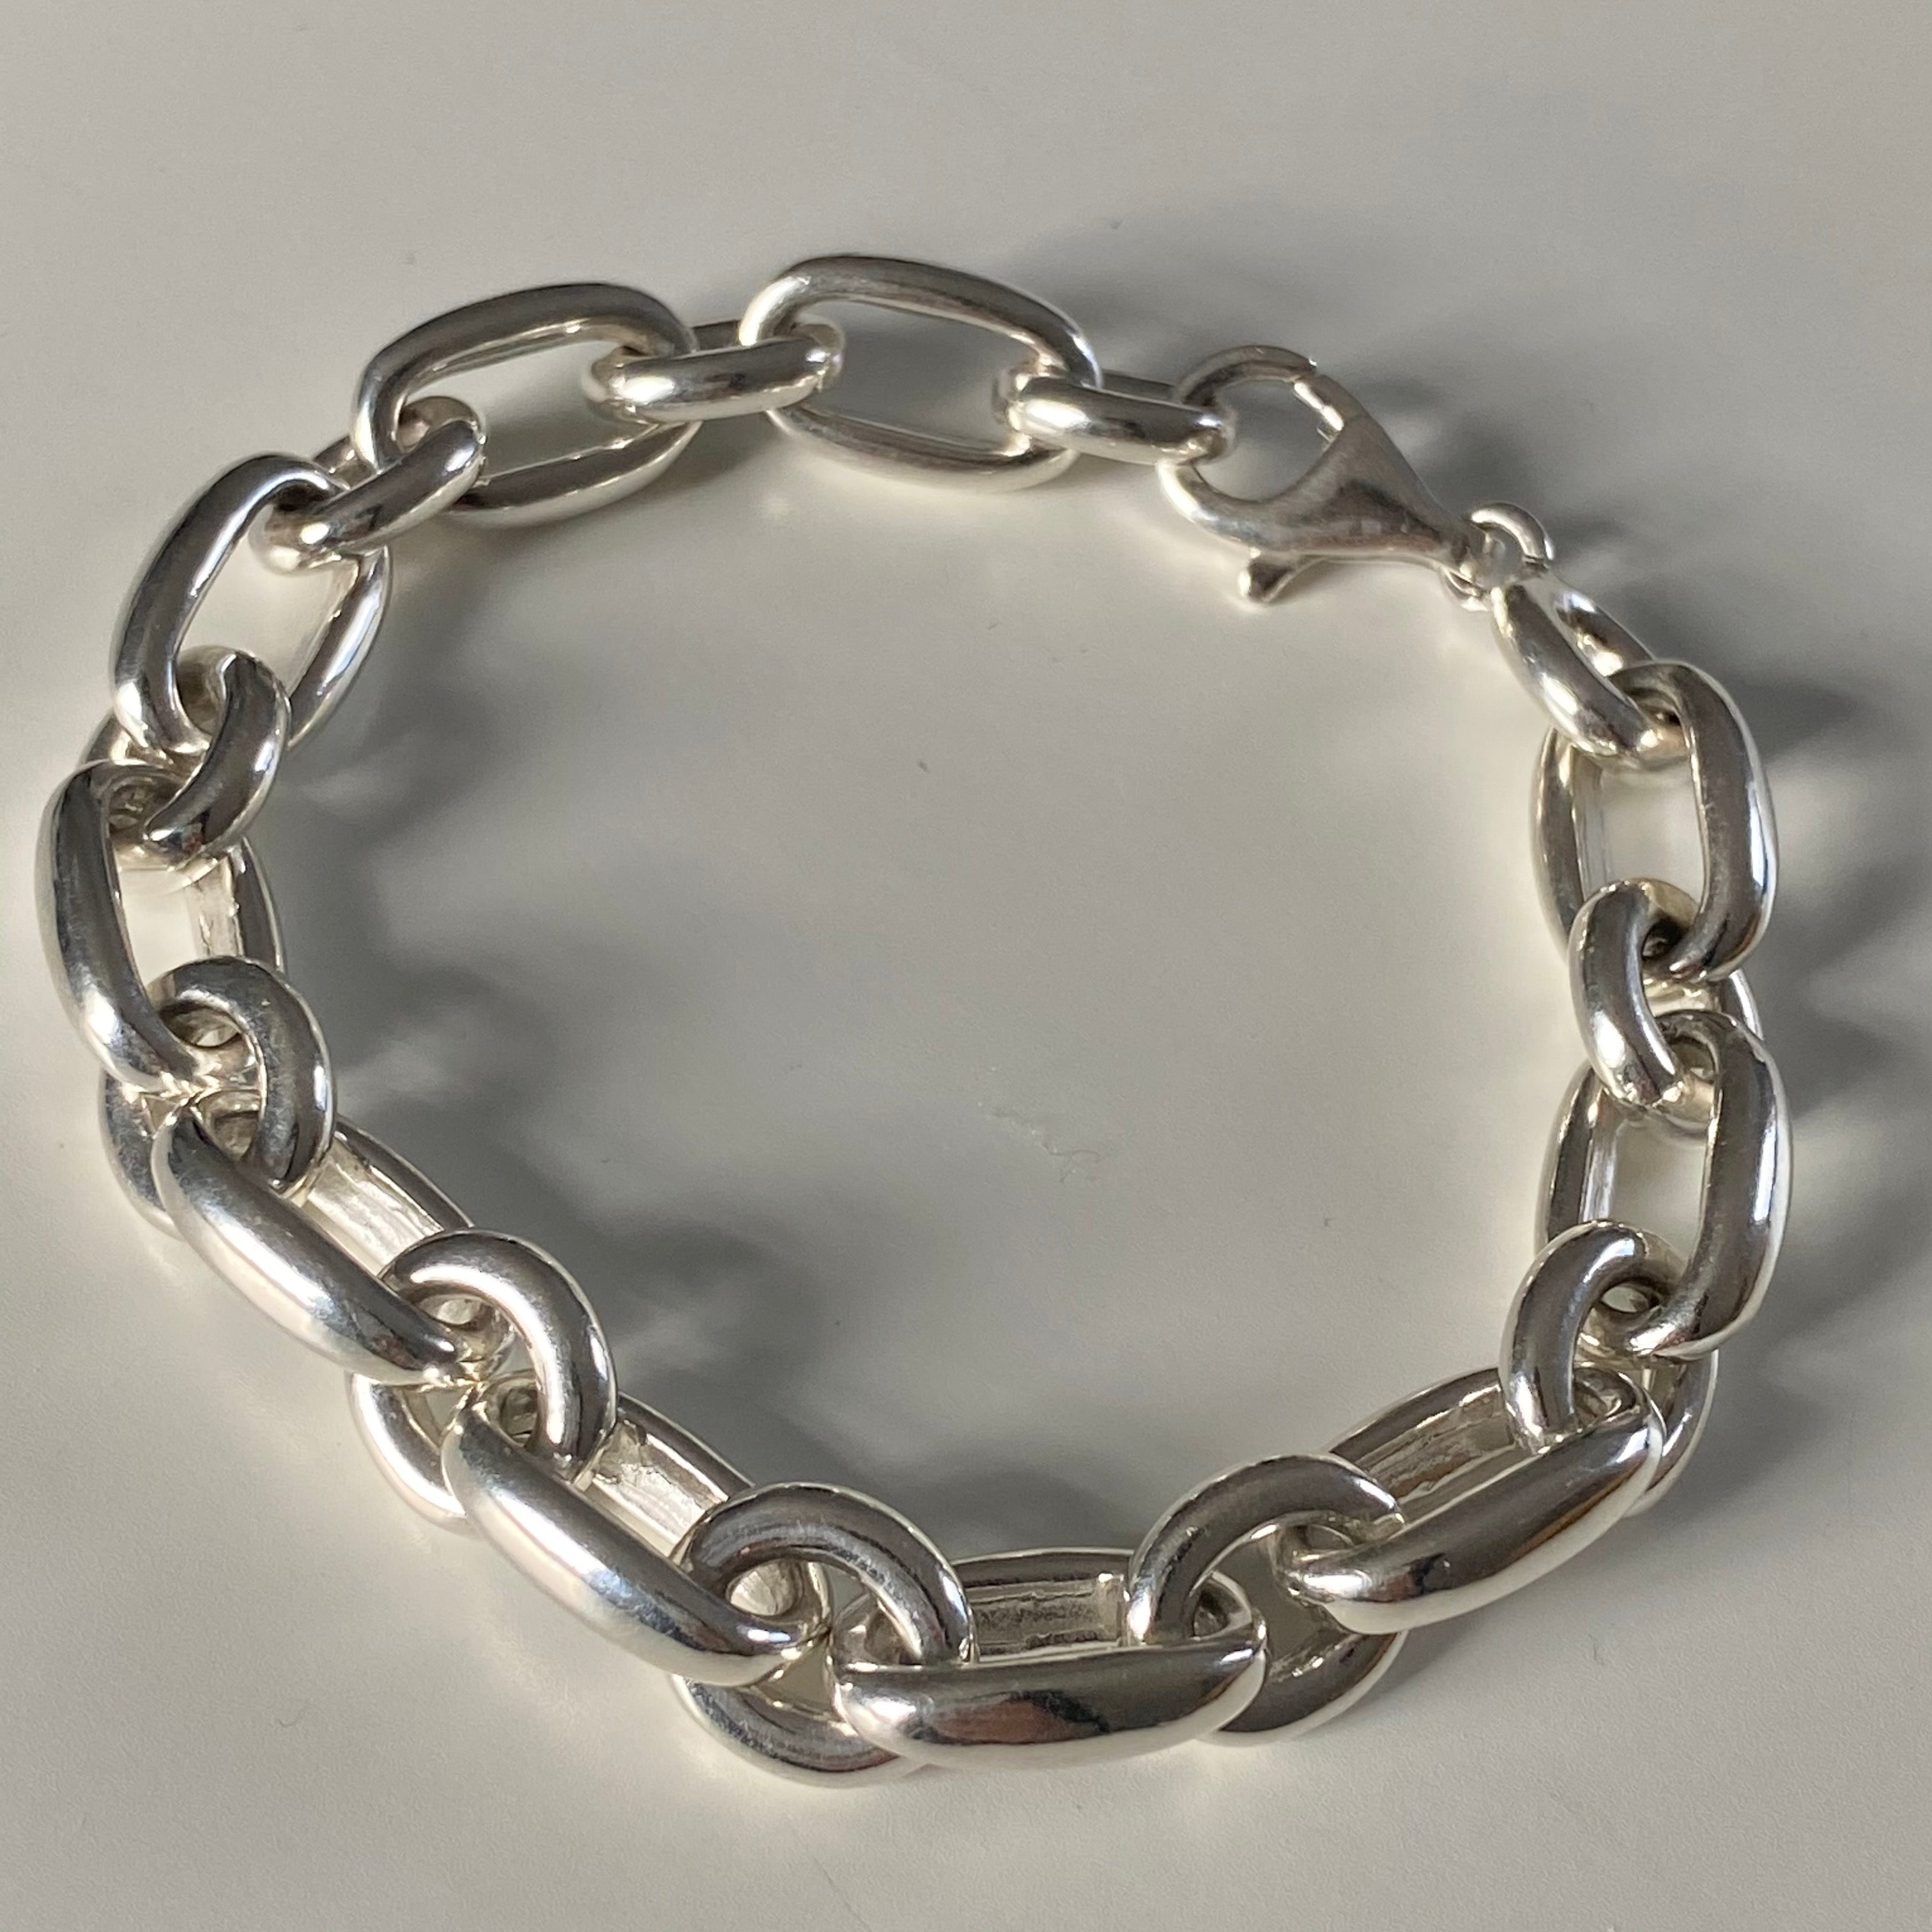 Statement Sterling Silver Link Bracelet with Oval Links